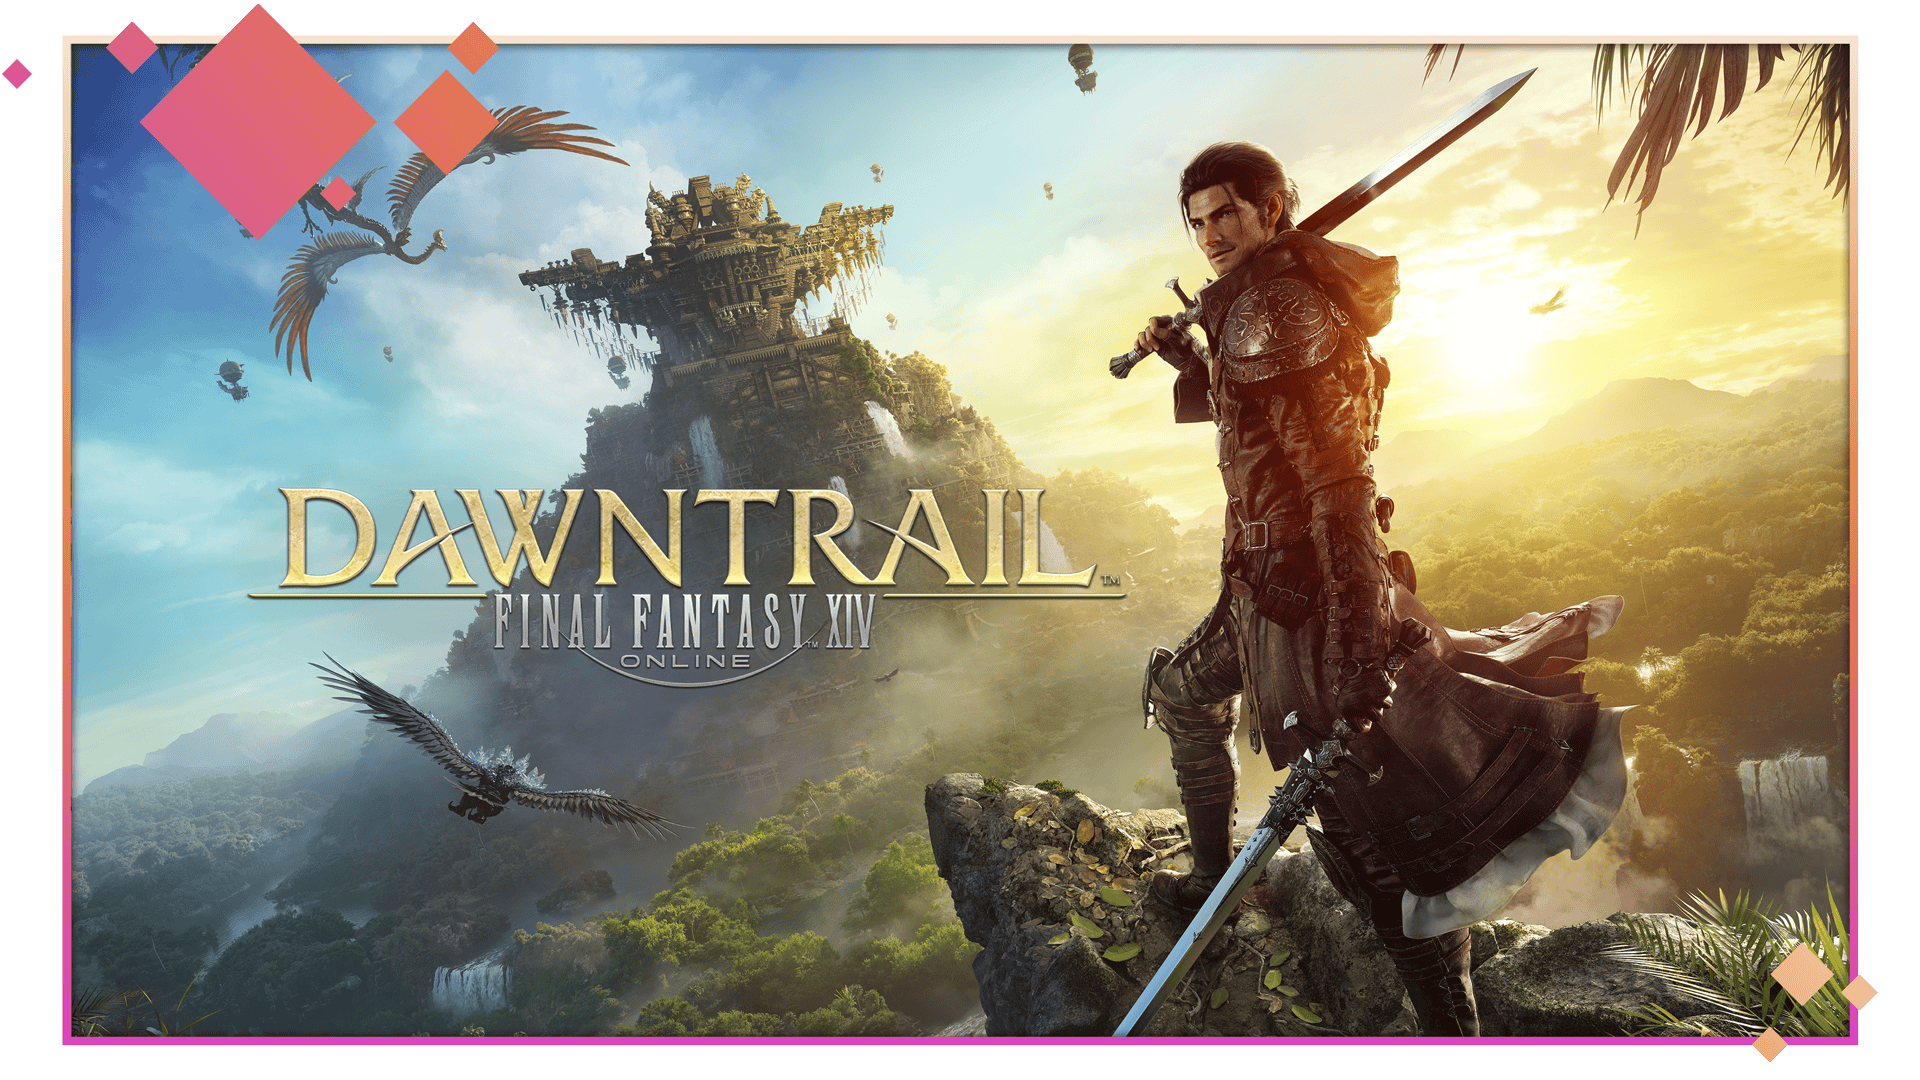 Final Fantasy XIV: Dawntrail - Full Trailer | PS5 & PS4 Games